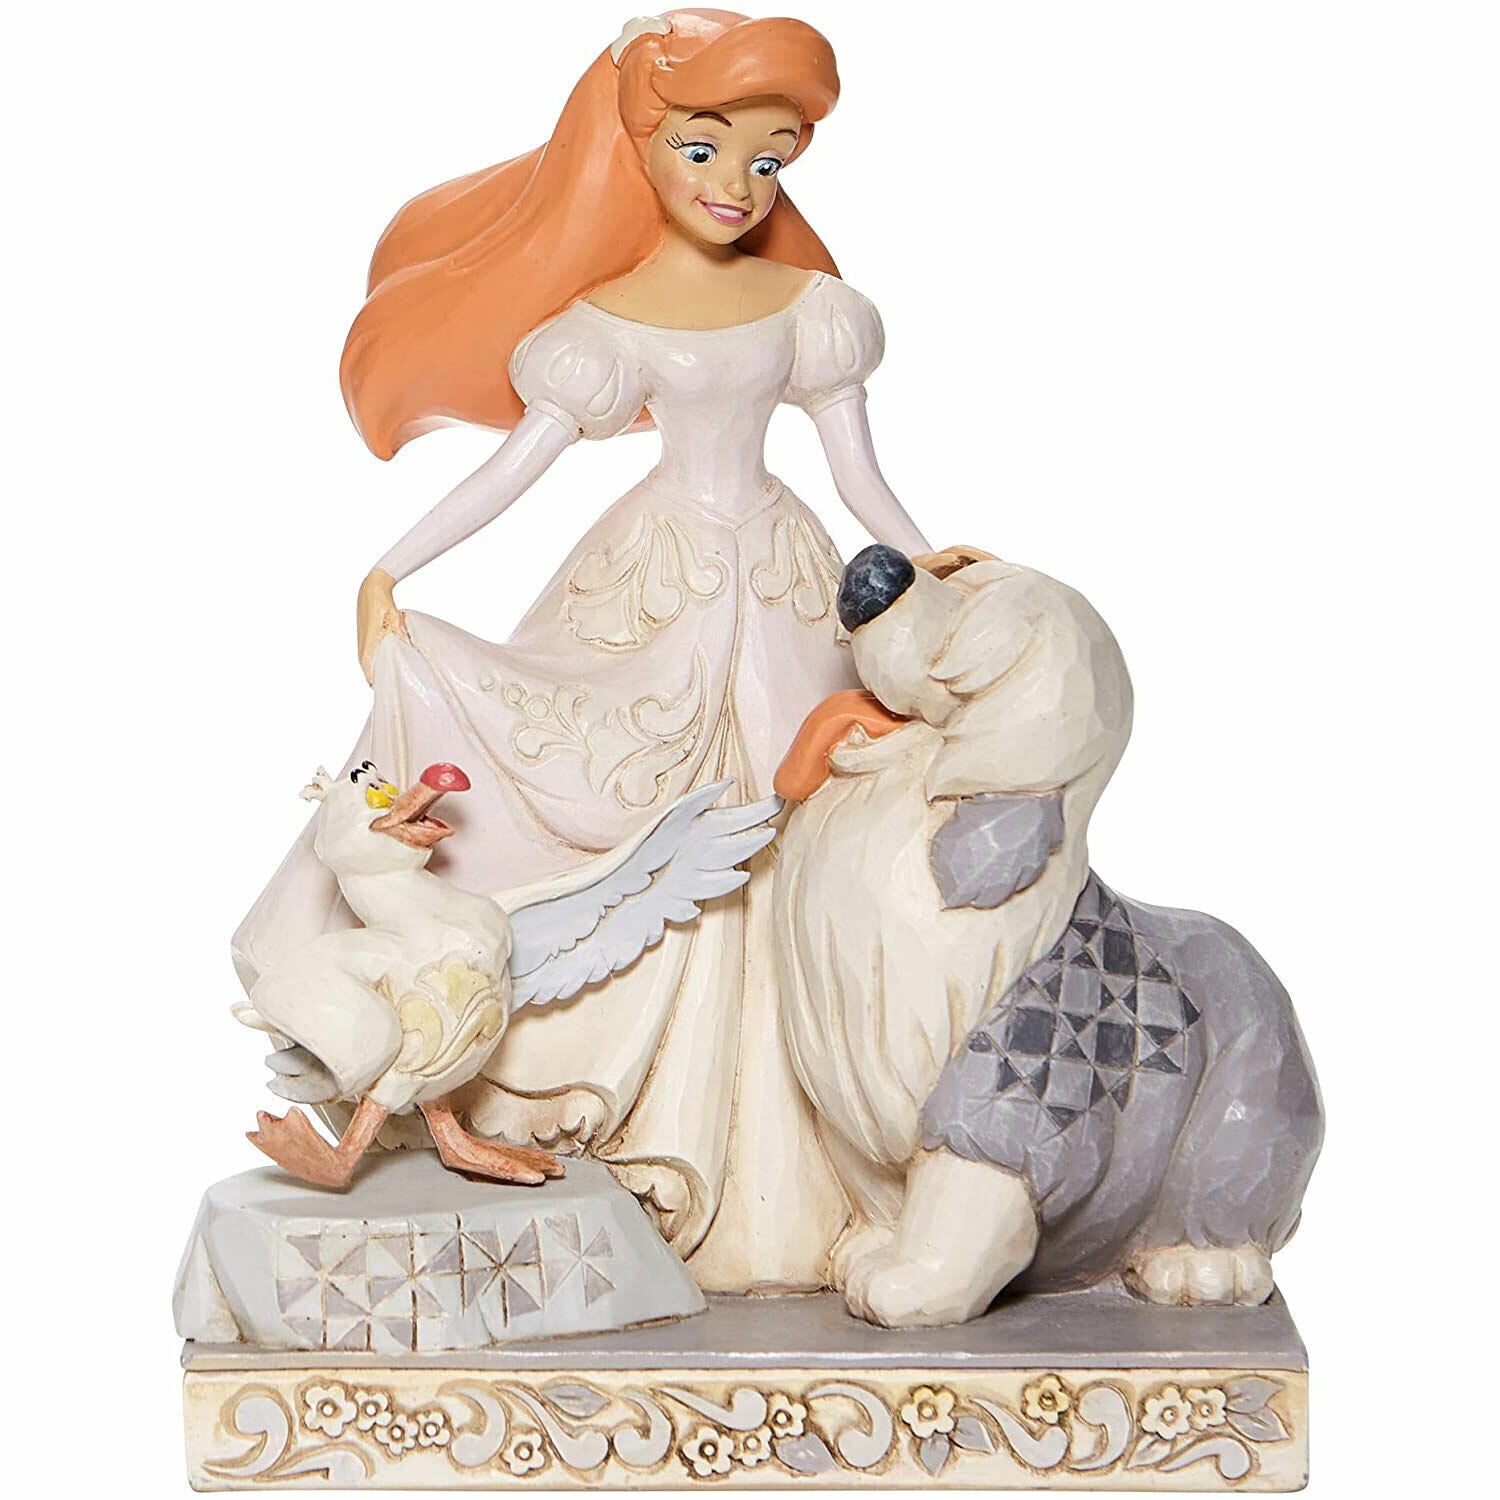 Disney Traditions Spirited Siren Figurine - White Woodland Ariel - New in Box